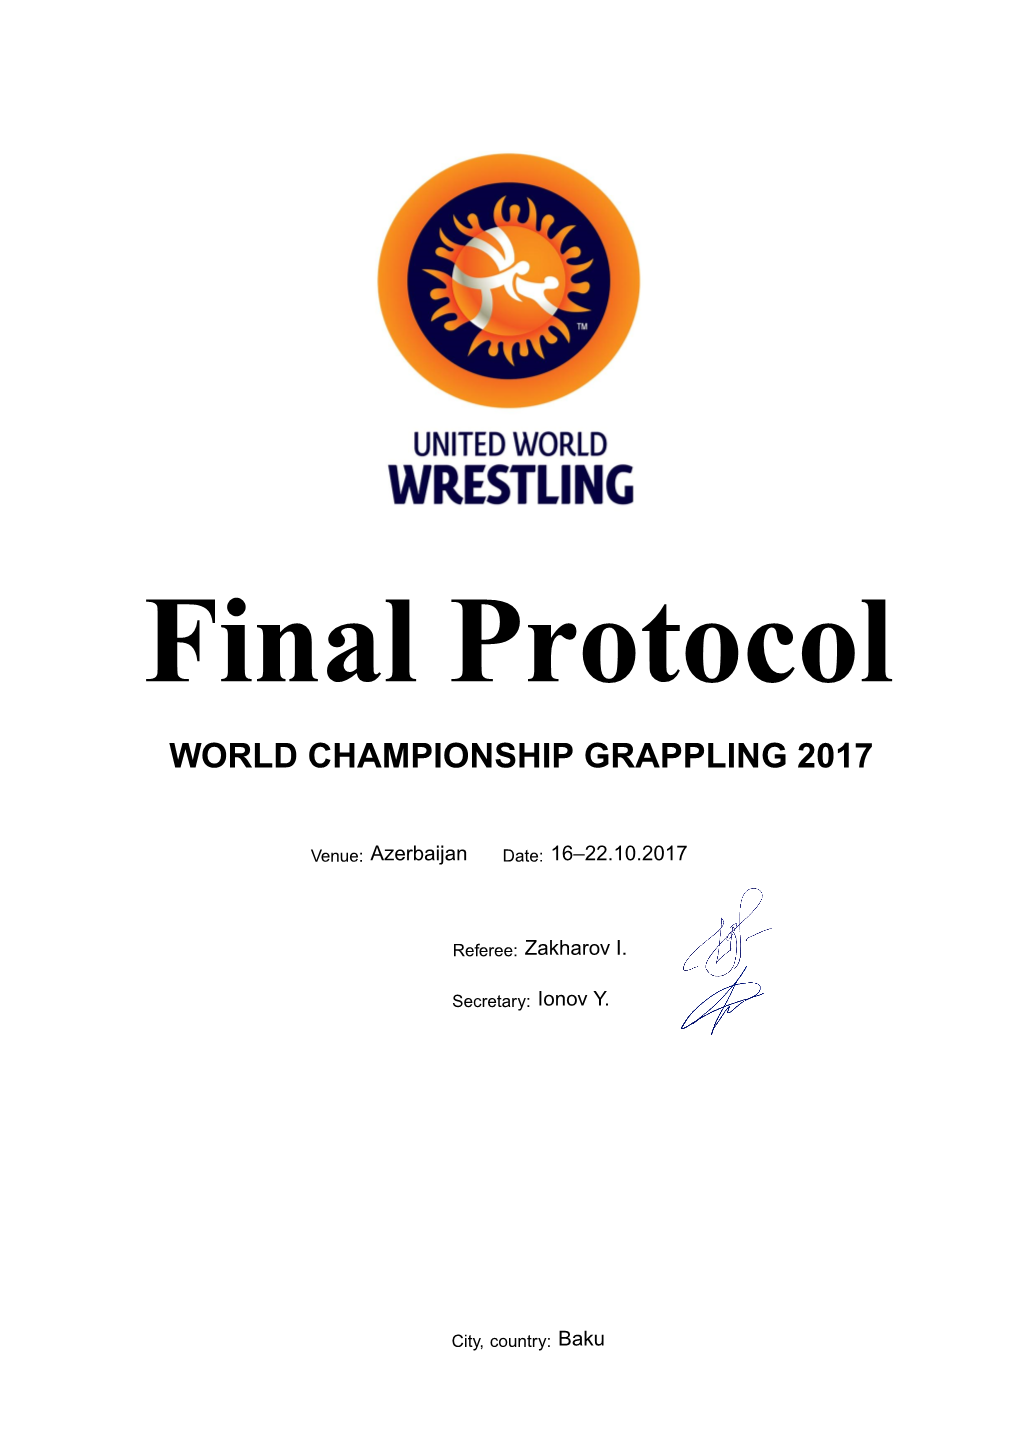 World Championship Grappling 2017